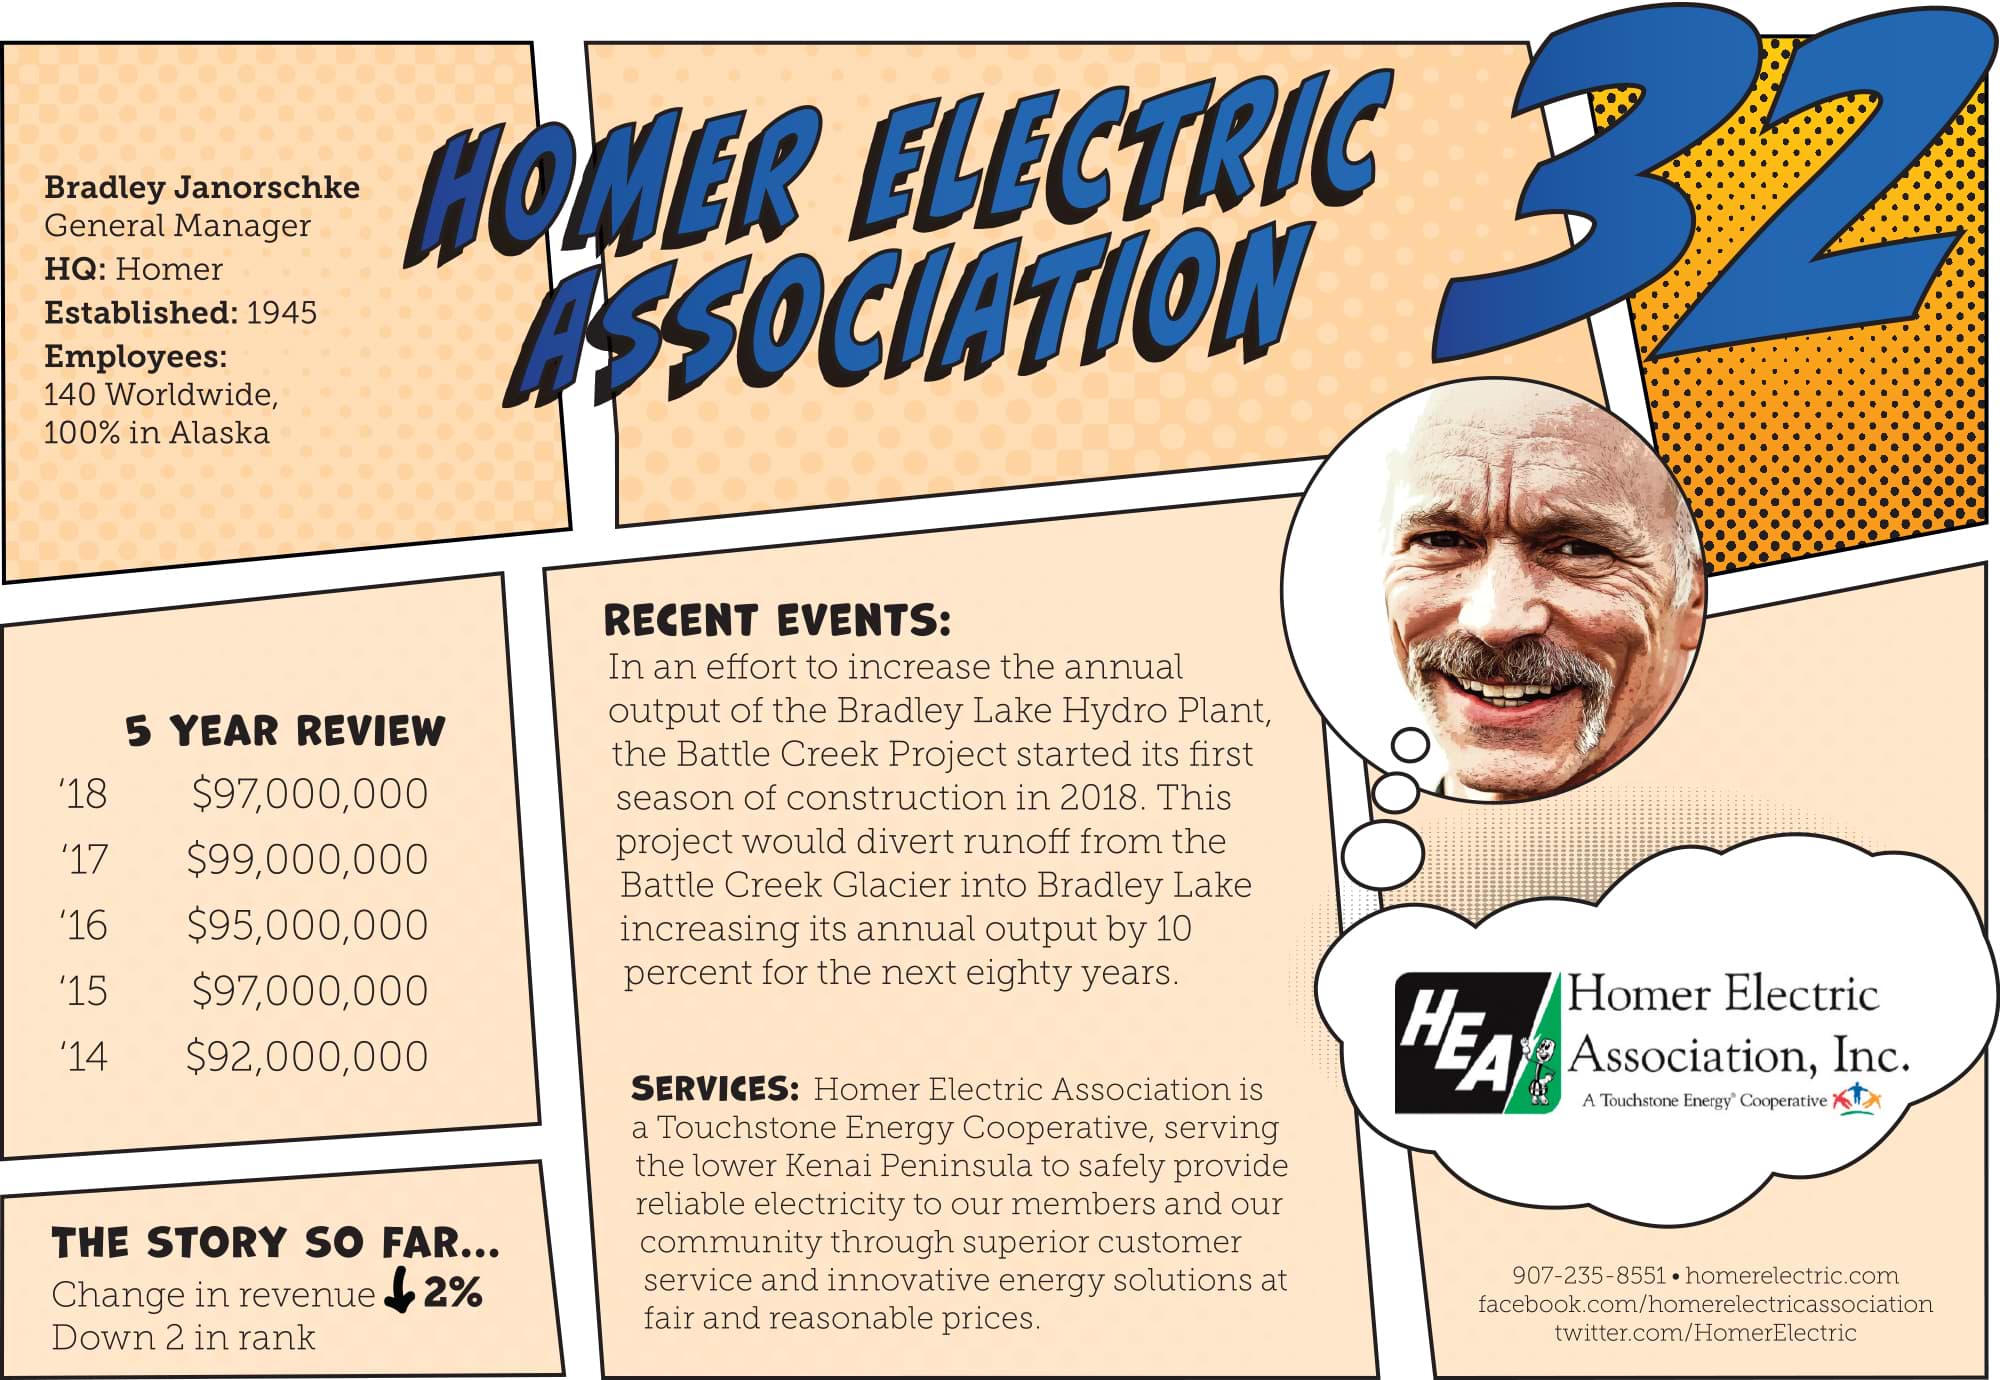 Homer Electric Association